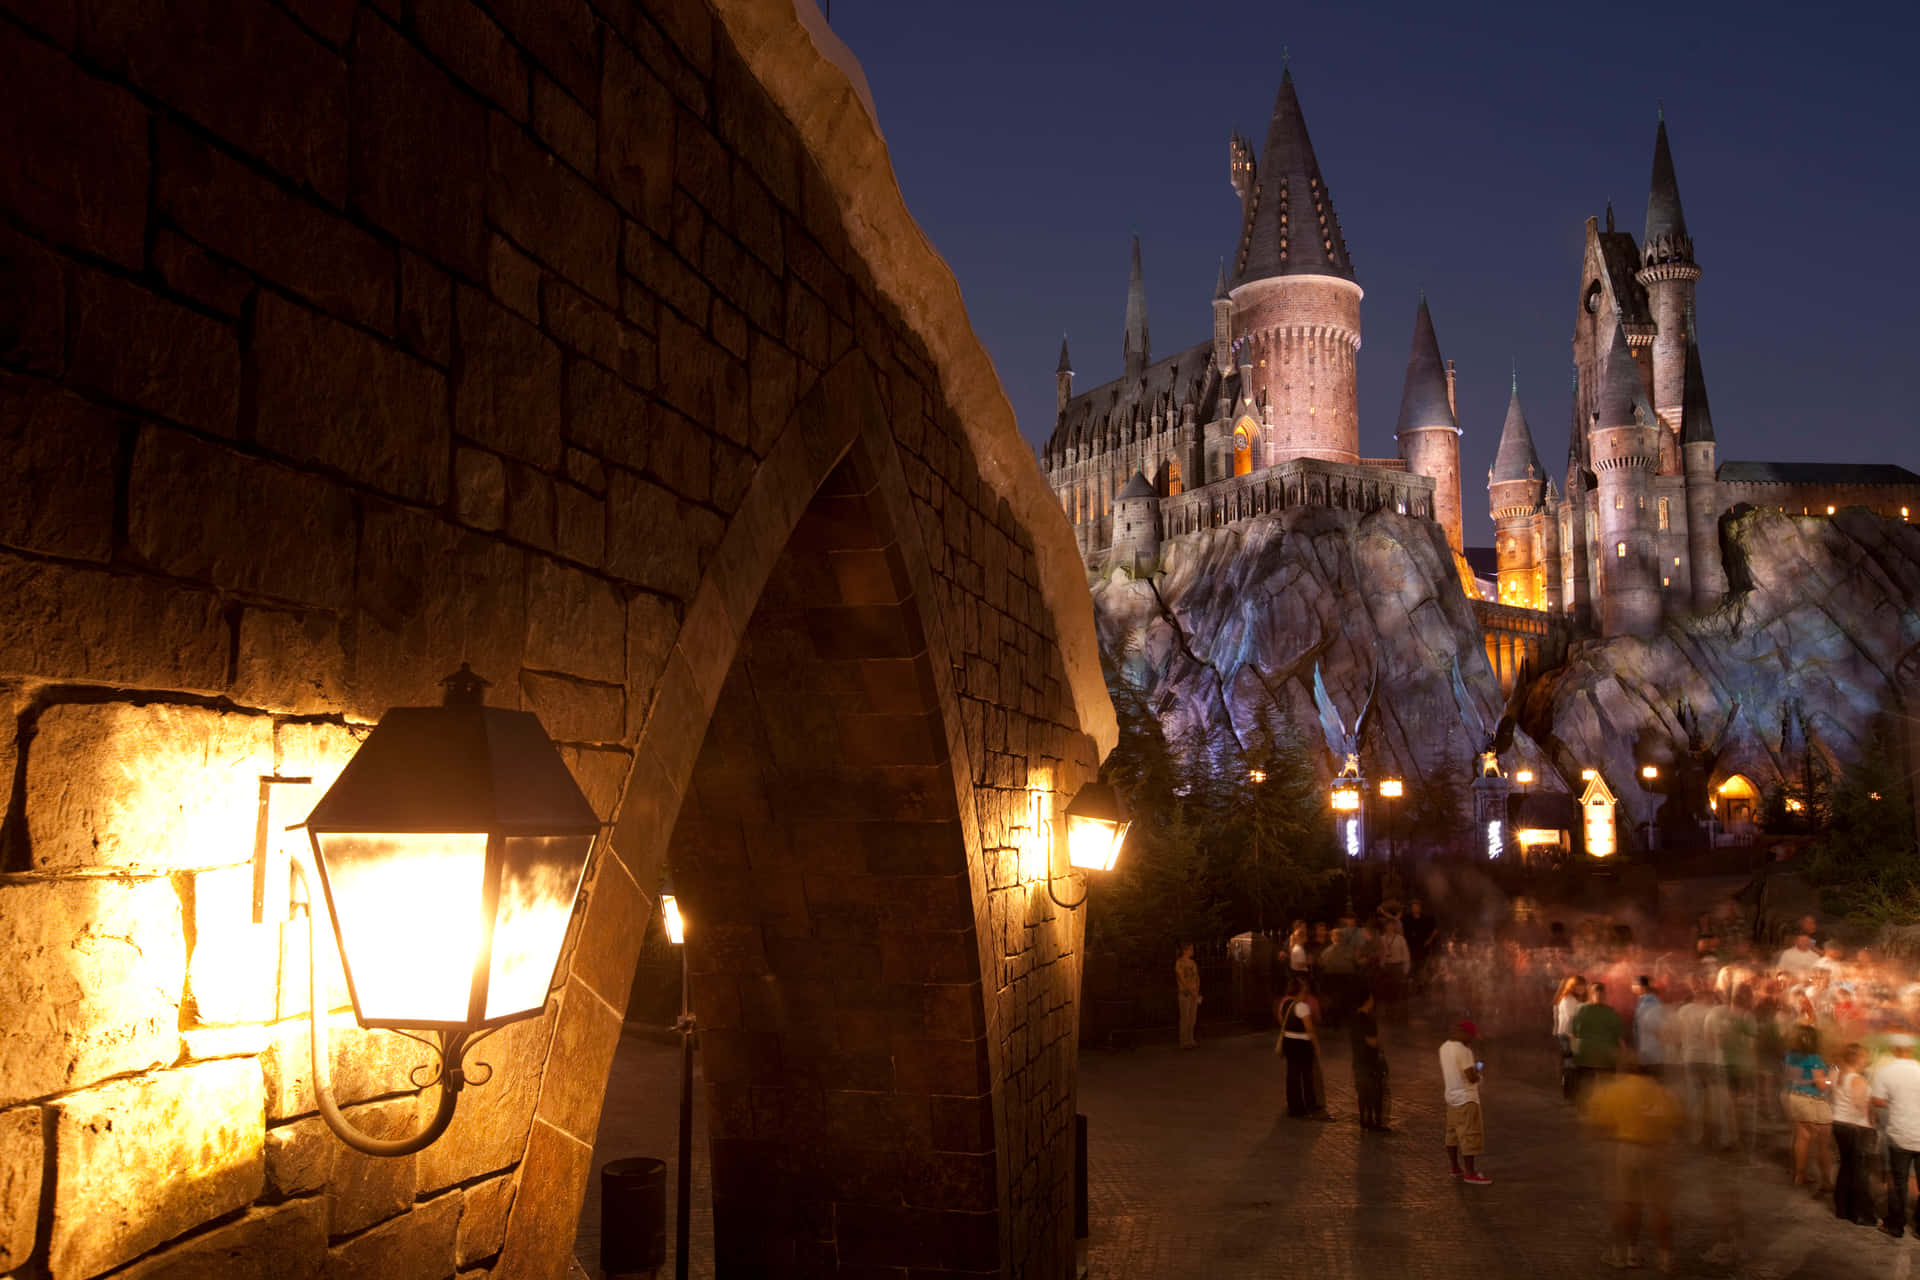 'The enchanted Hogwarts castle.'